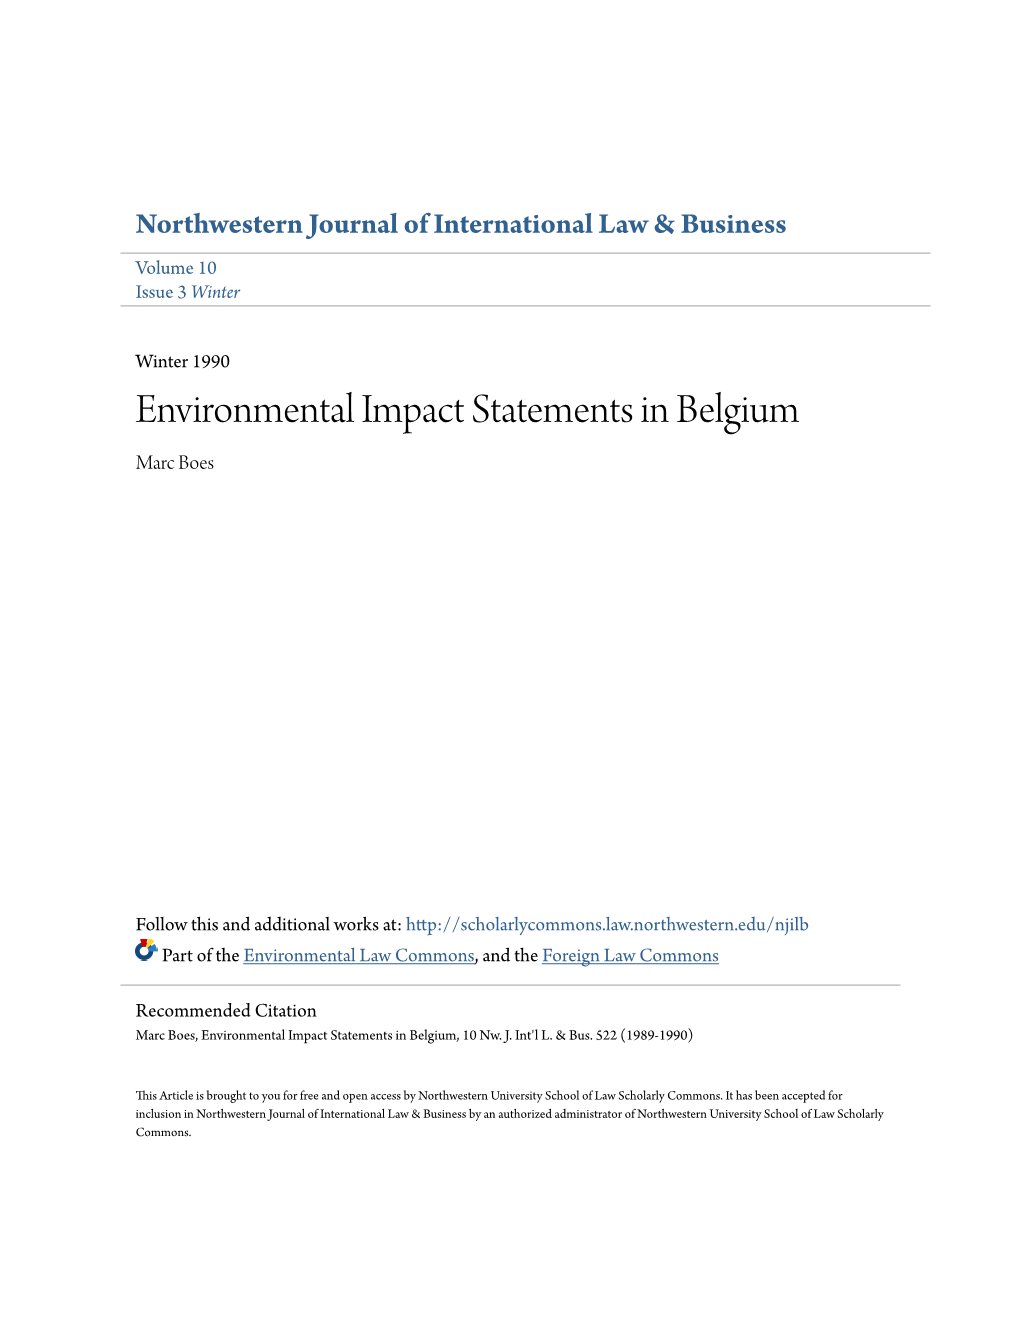 Environmental Impact Statements in Belgium Marc Boes